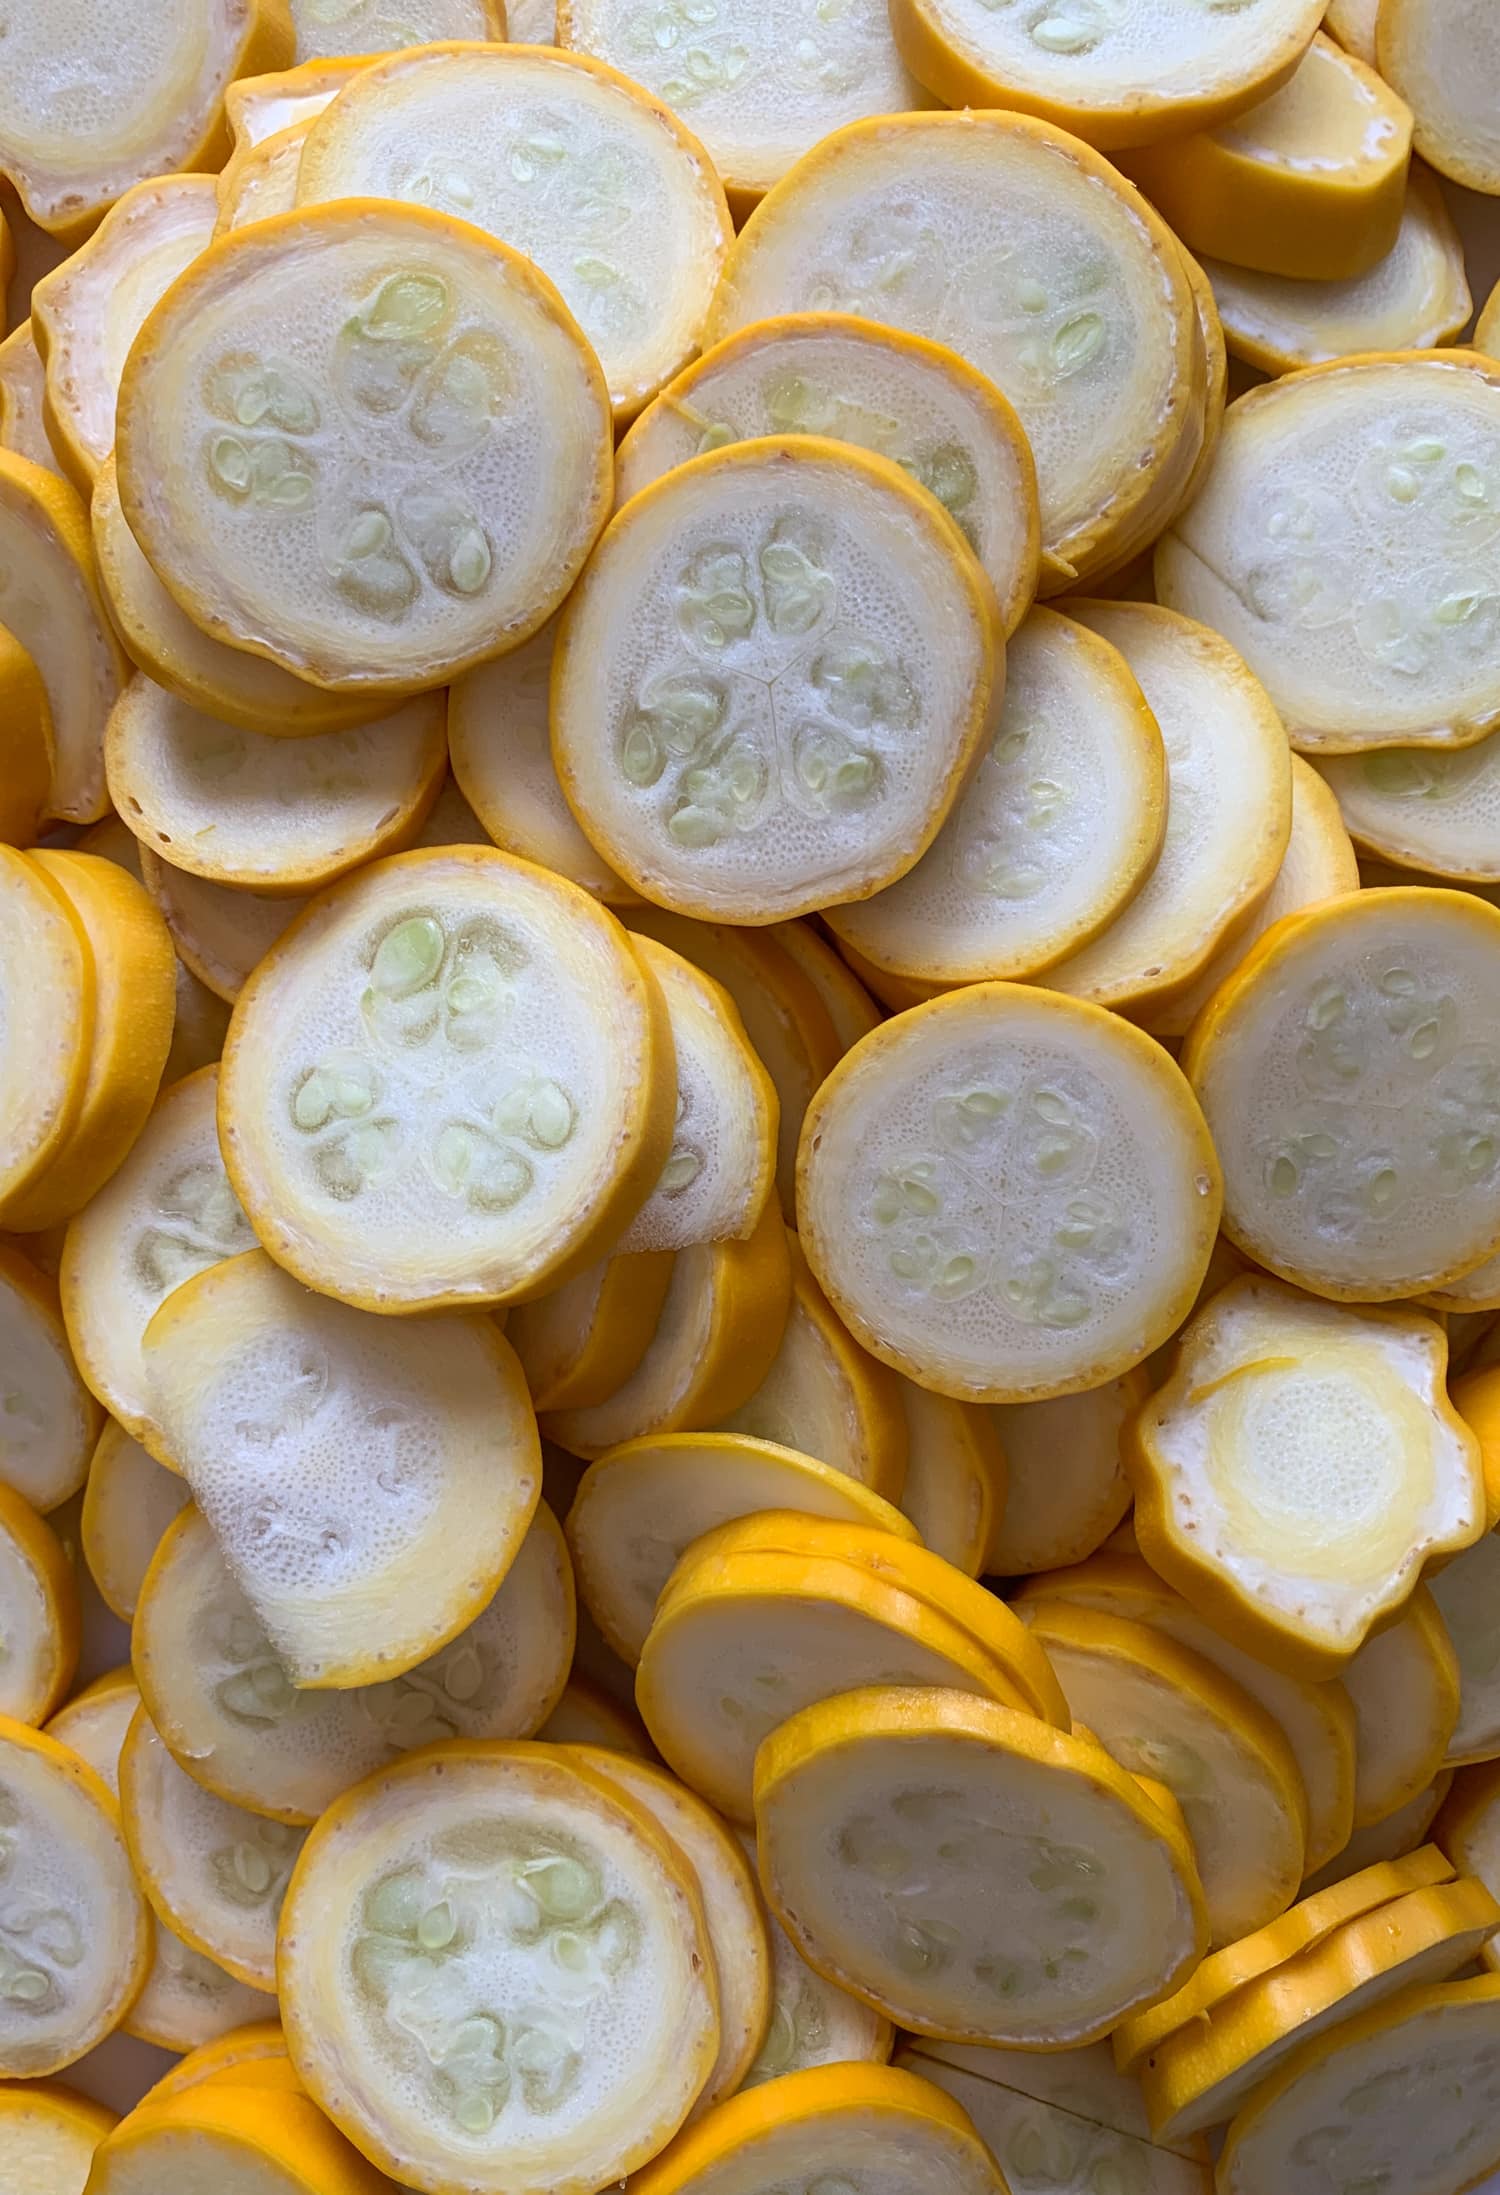 Assorted round yellow squash slices.